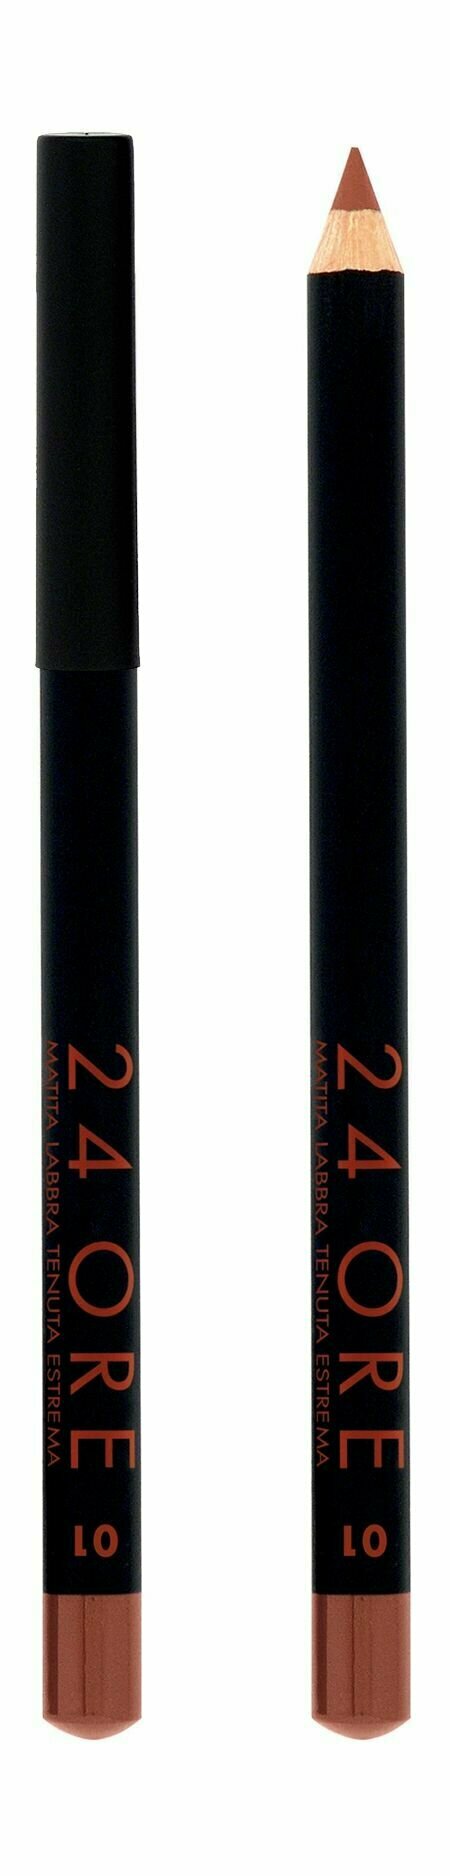 Стойкий карандаш для губ / 1 Нюд бежевый / Deborah Milano 24 Ore Long Lasting Lip Pencil